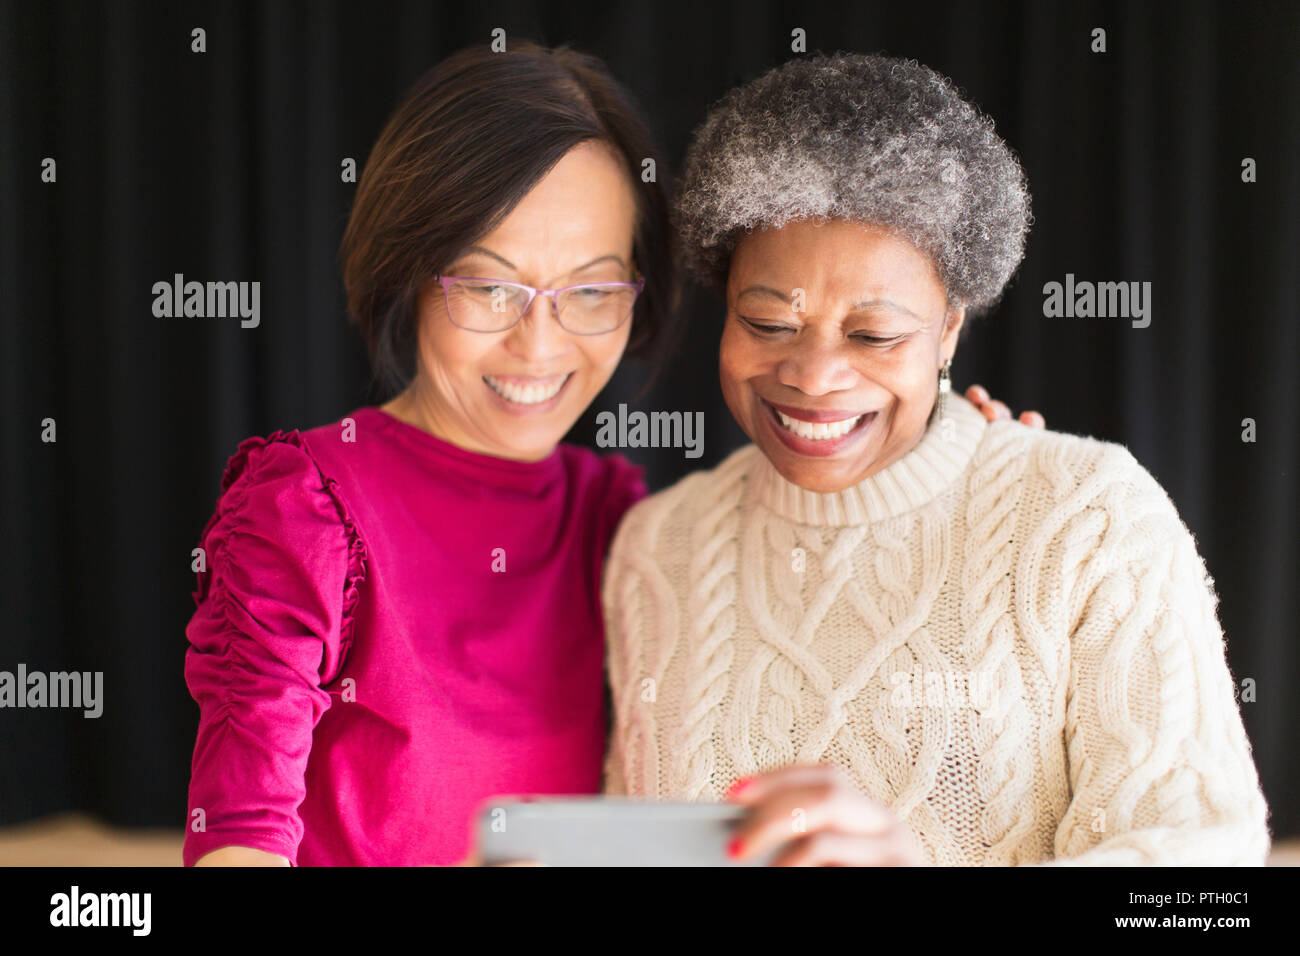 Smiling active senior women taking selfie with camera phone Stock Photo